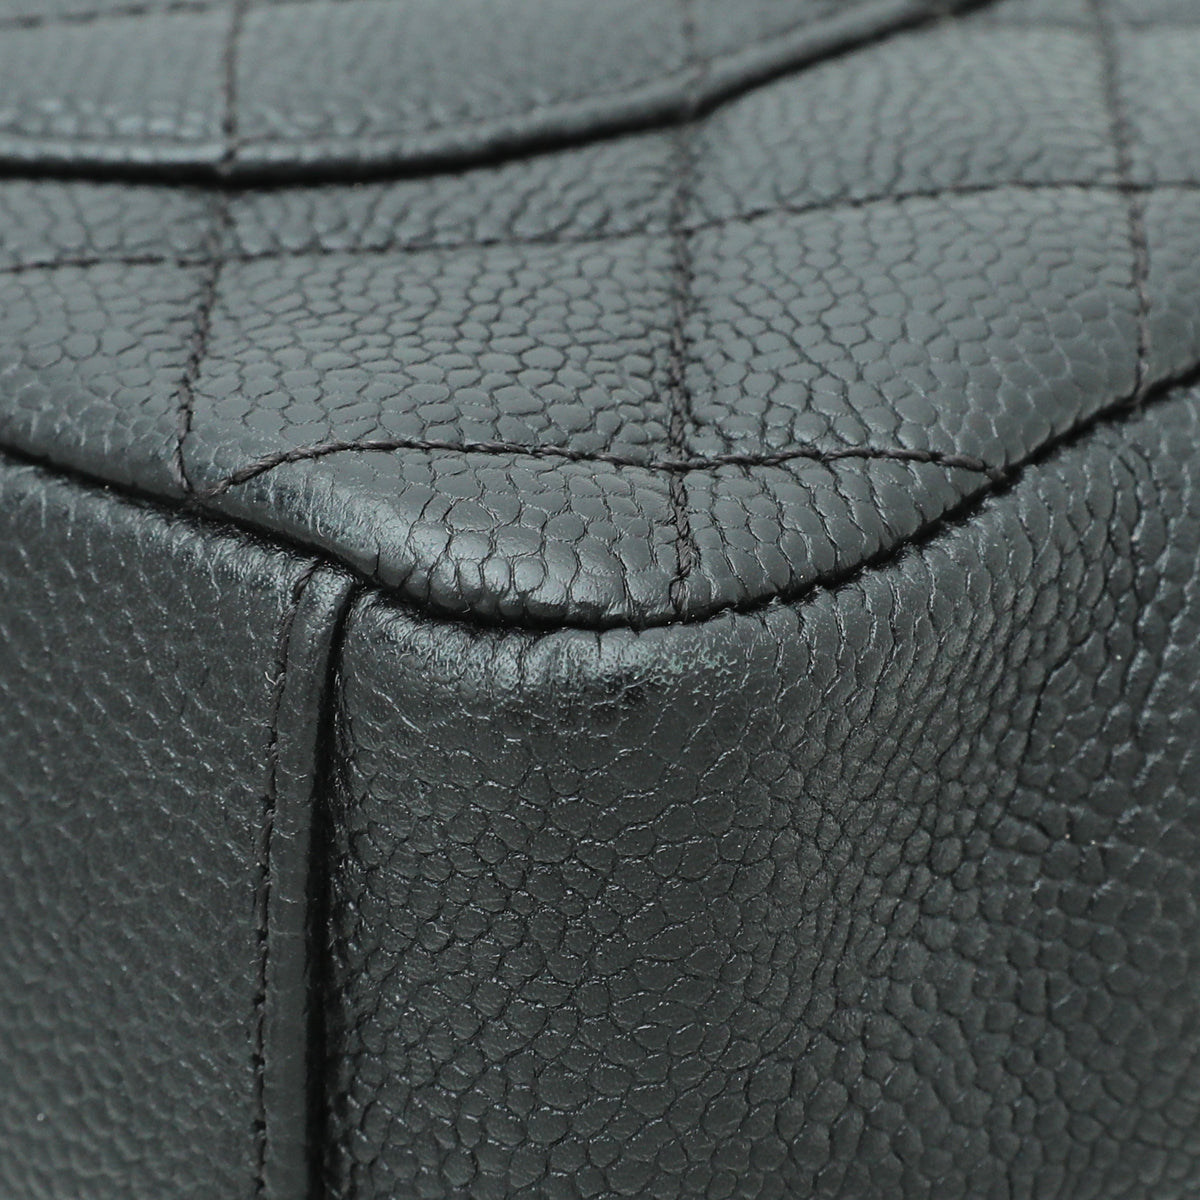 Chanel Black CC Filigree Medium Flap Bag